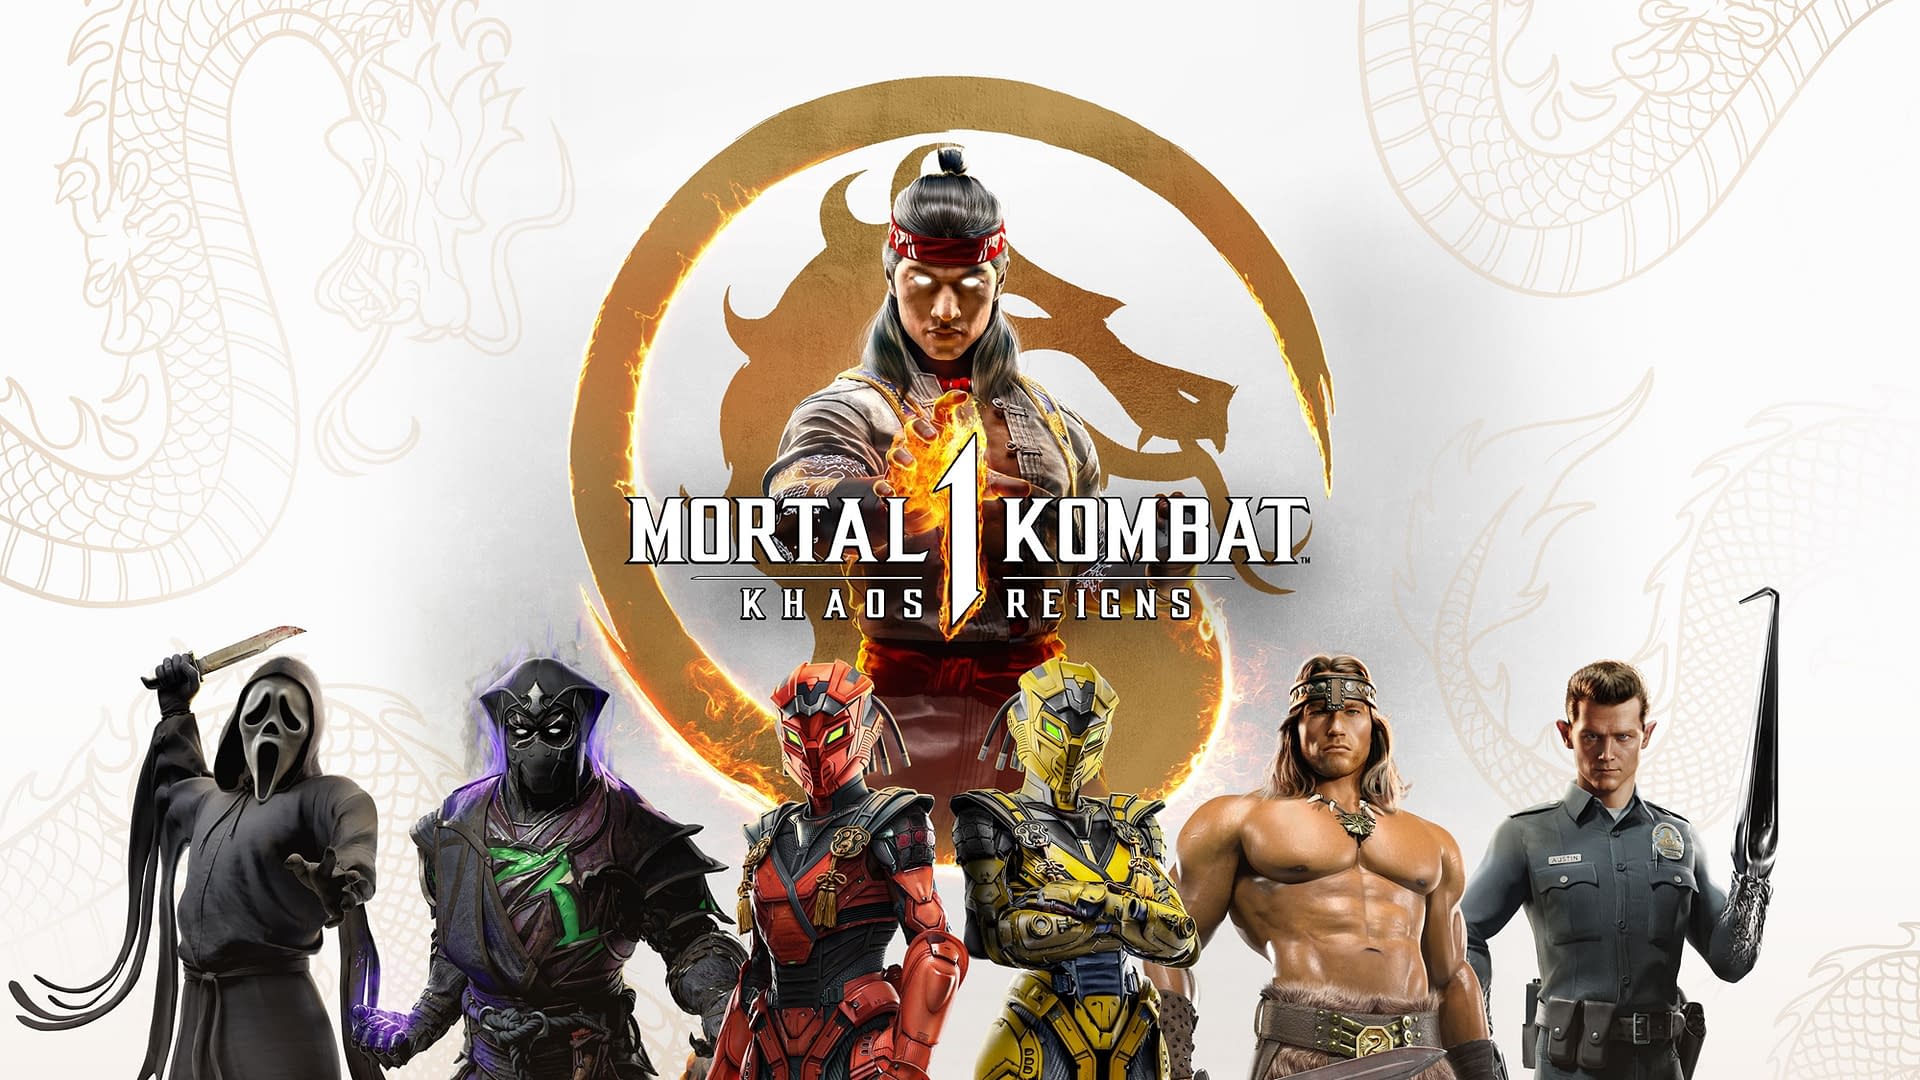 Mortal Kombat 1 “Khaos Reigns” expansion krashes onto Nintendo Switch in September